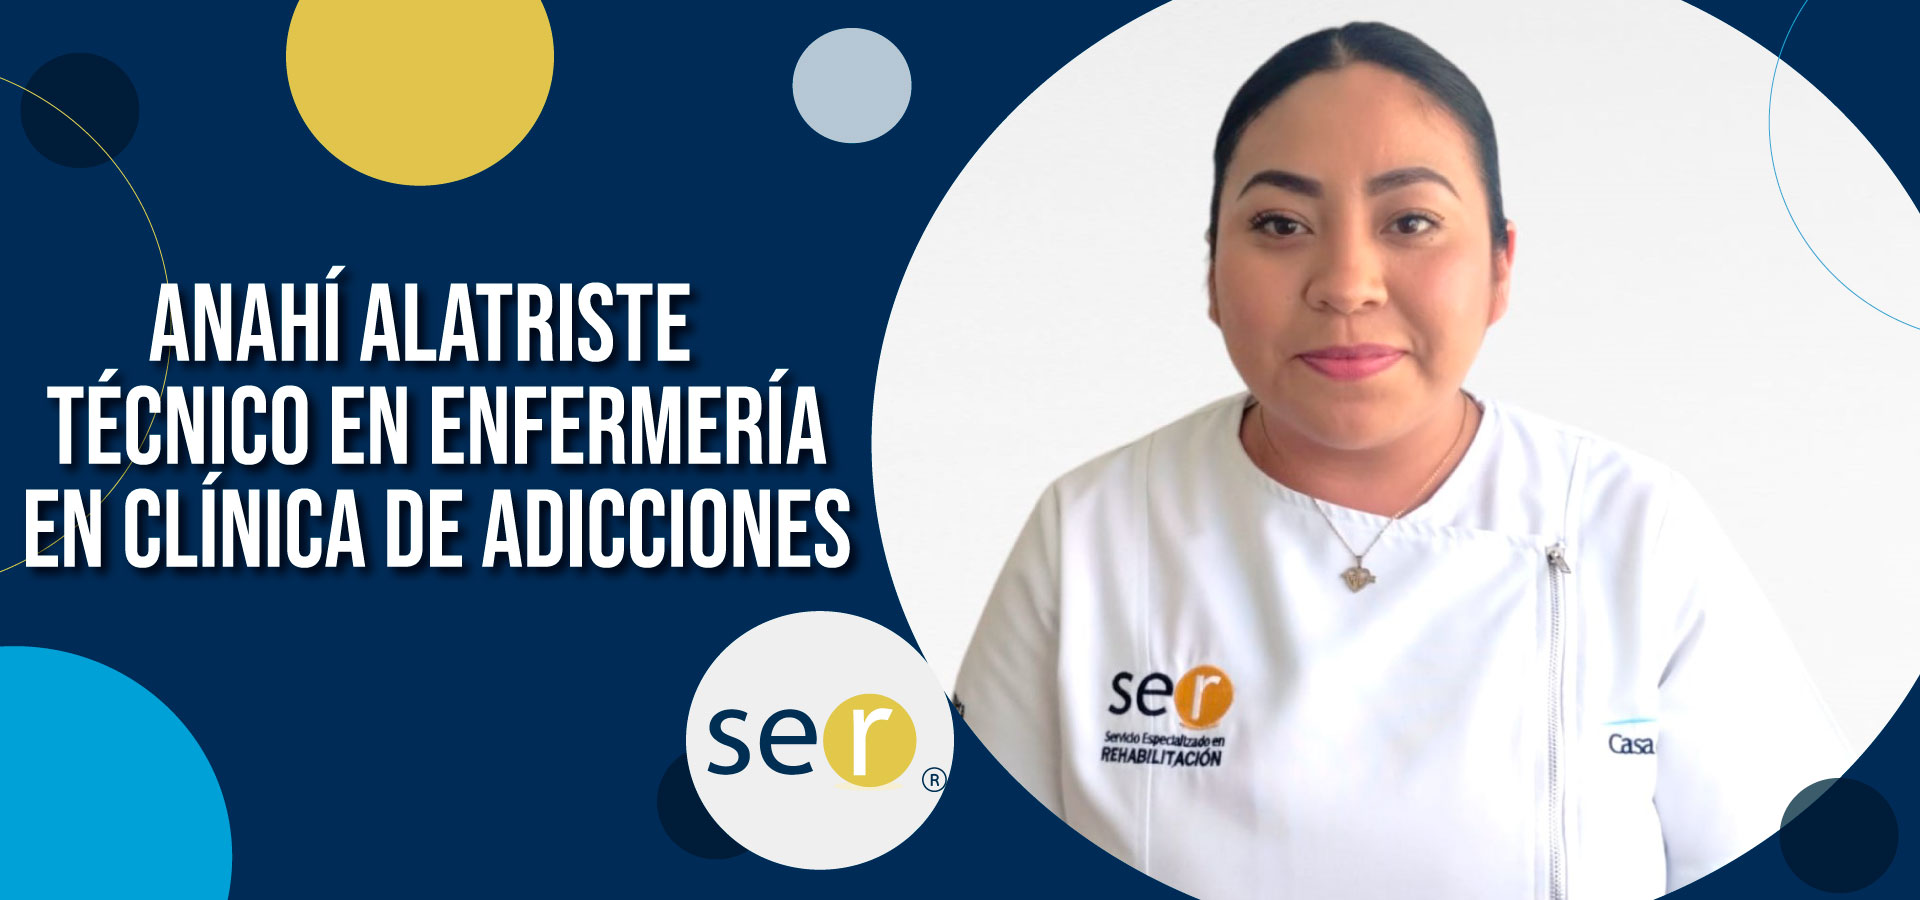 Clinica ser banner Anahi Alatriste del Carmen Tecnico en enfermeria en clinica de adicciones - Clínica-SER